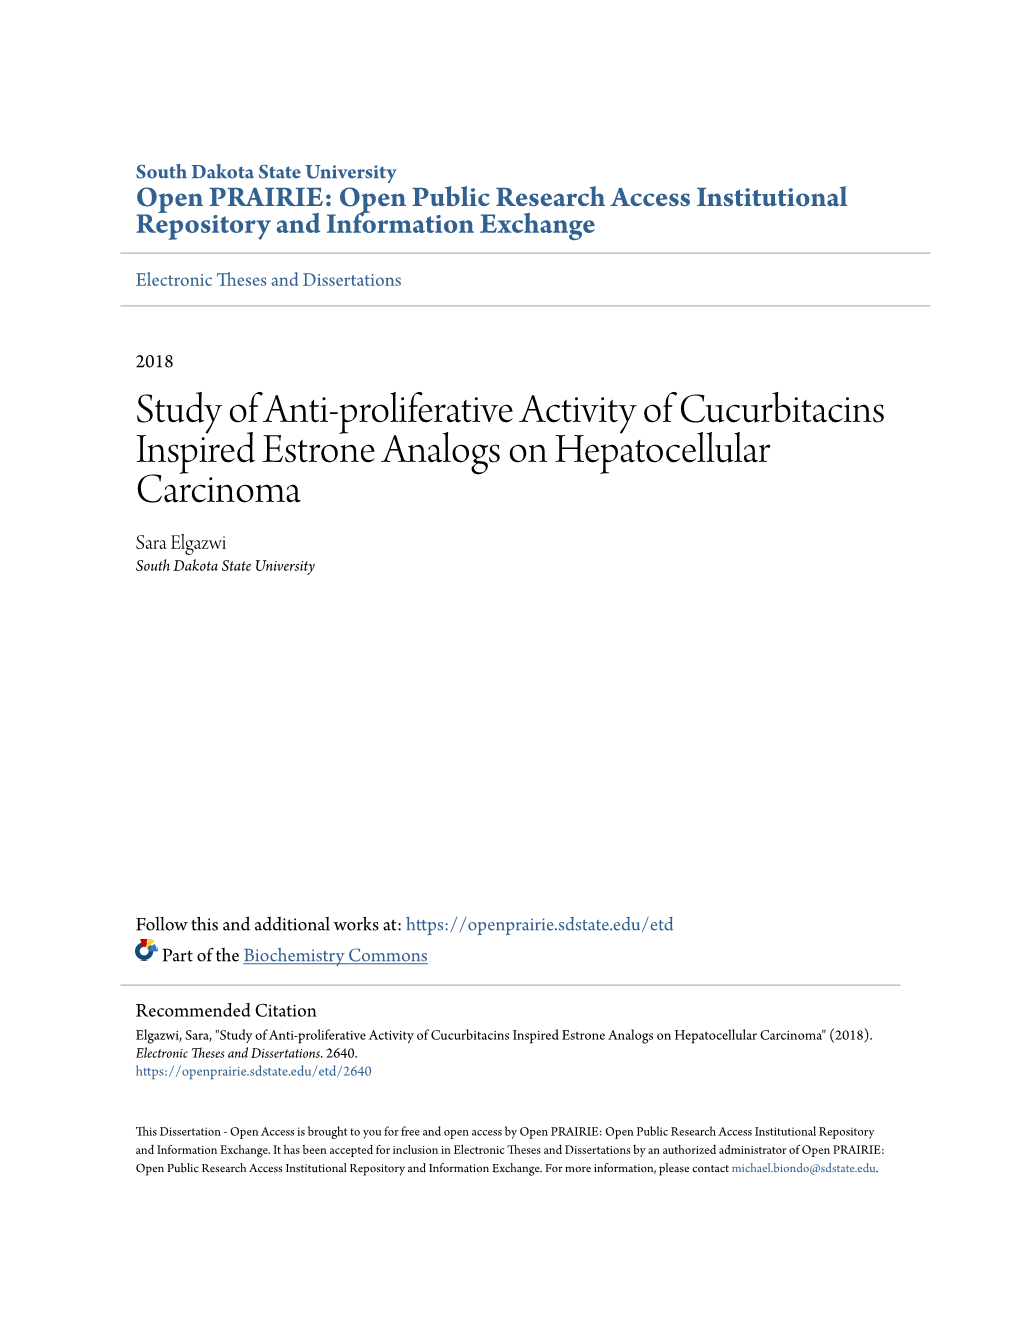 Study of Anti-Proliferative Activity of Cucurbitacins Inspired Estrone Analogs on Hepatocellular Carcinoma Sara Elgazwi South Dakota State University